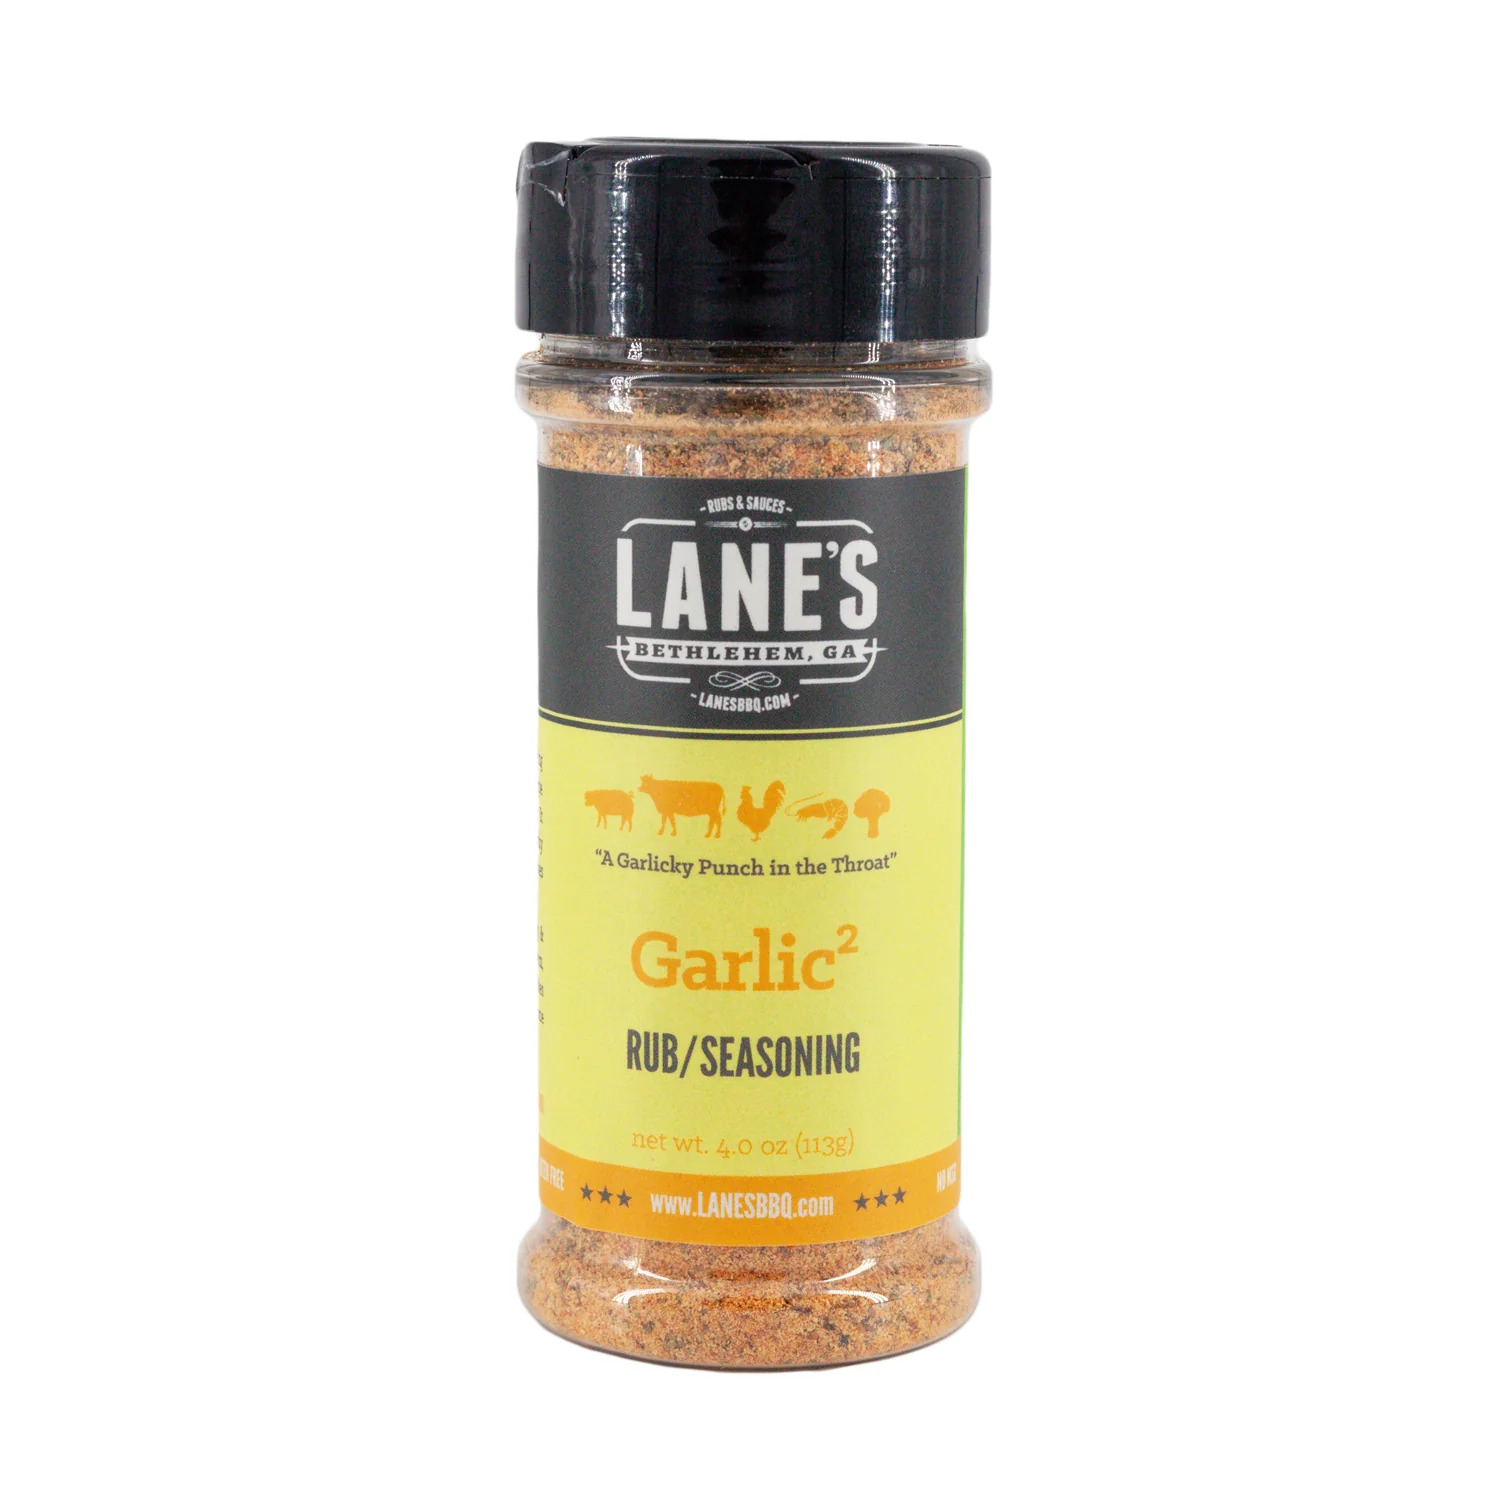 Lane’s BBQ - Garlic² Rub